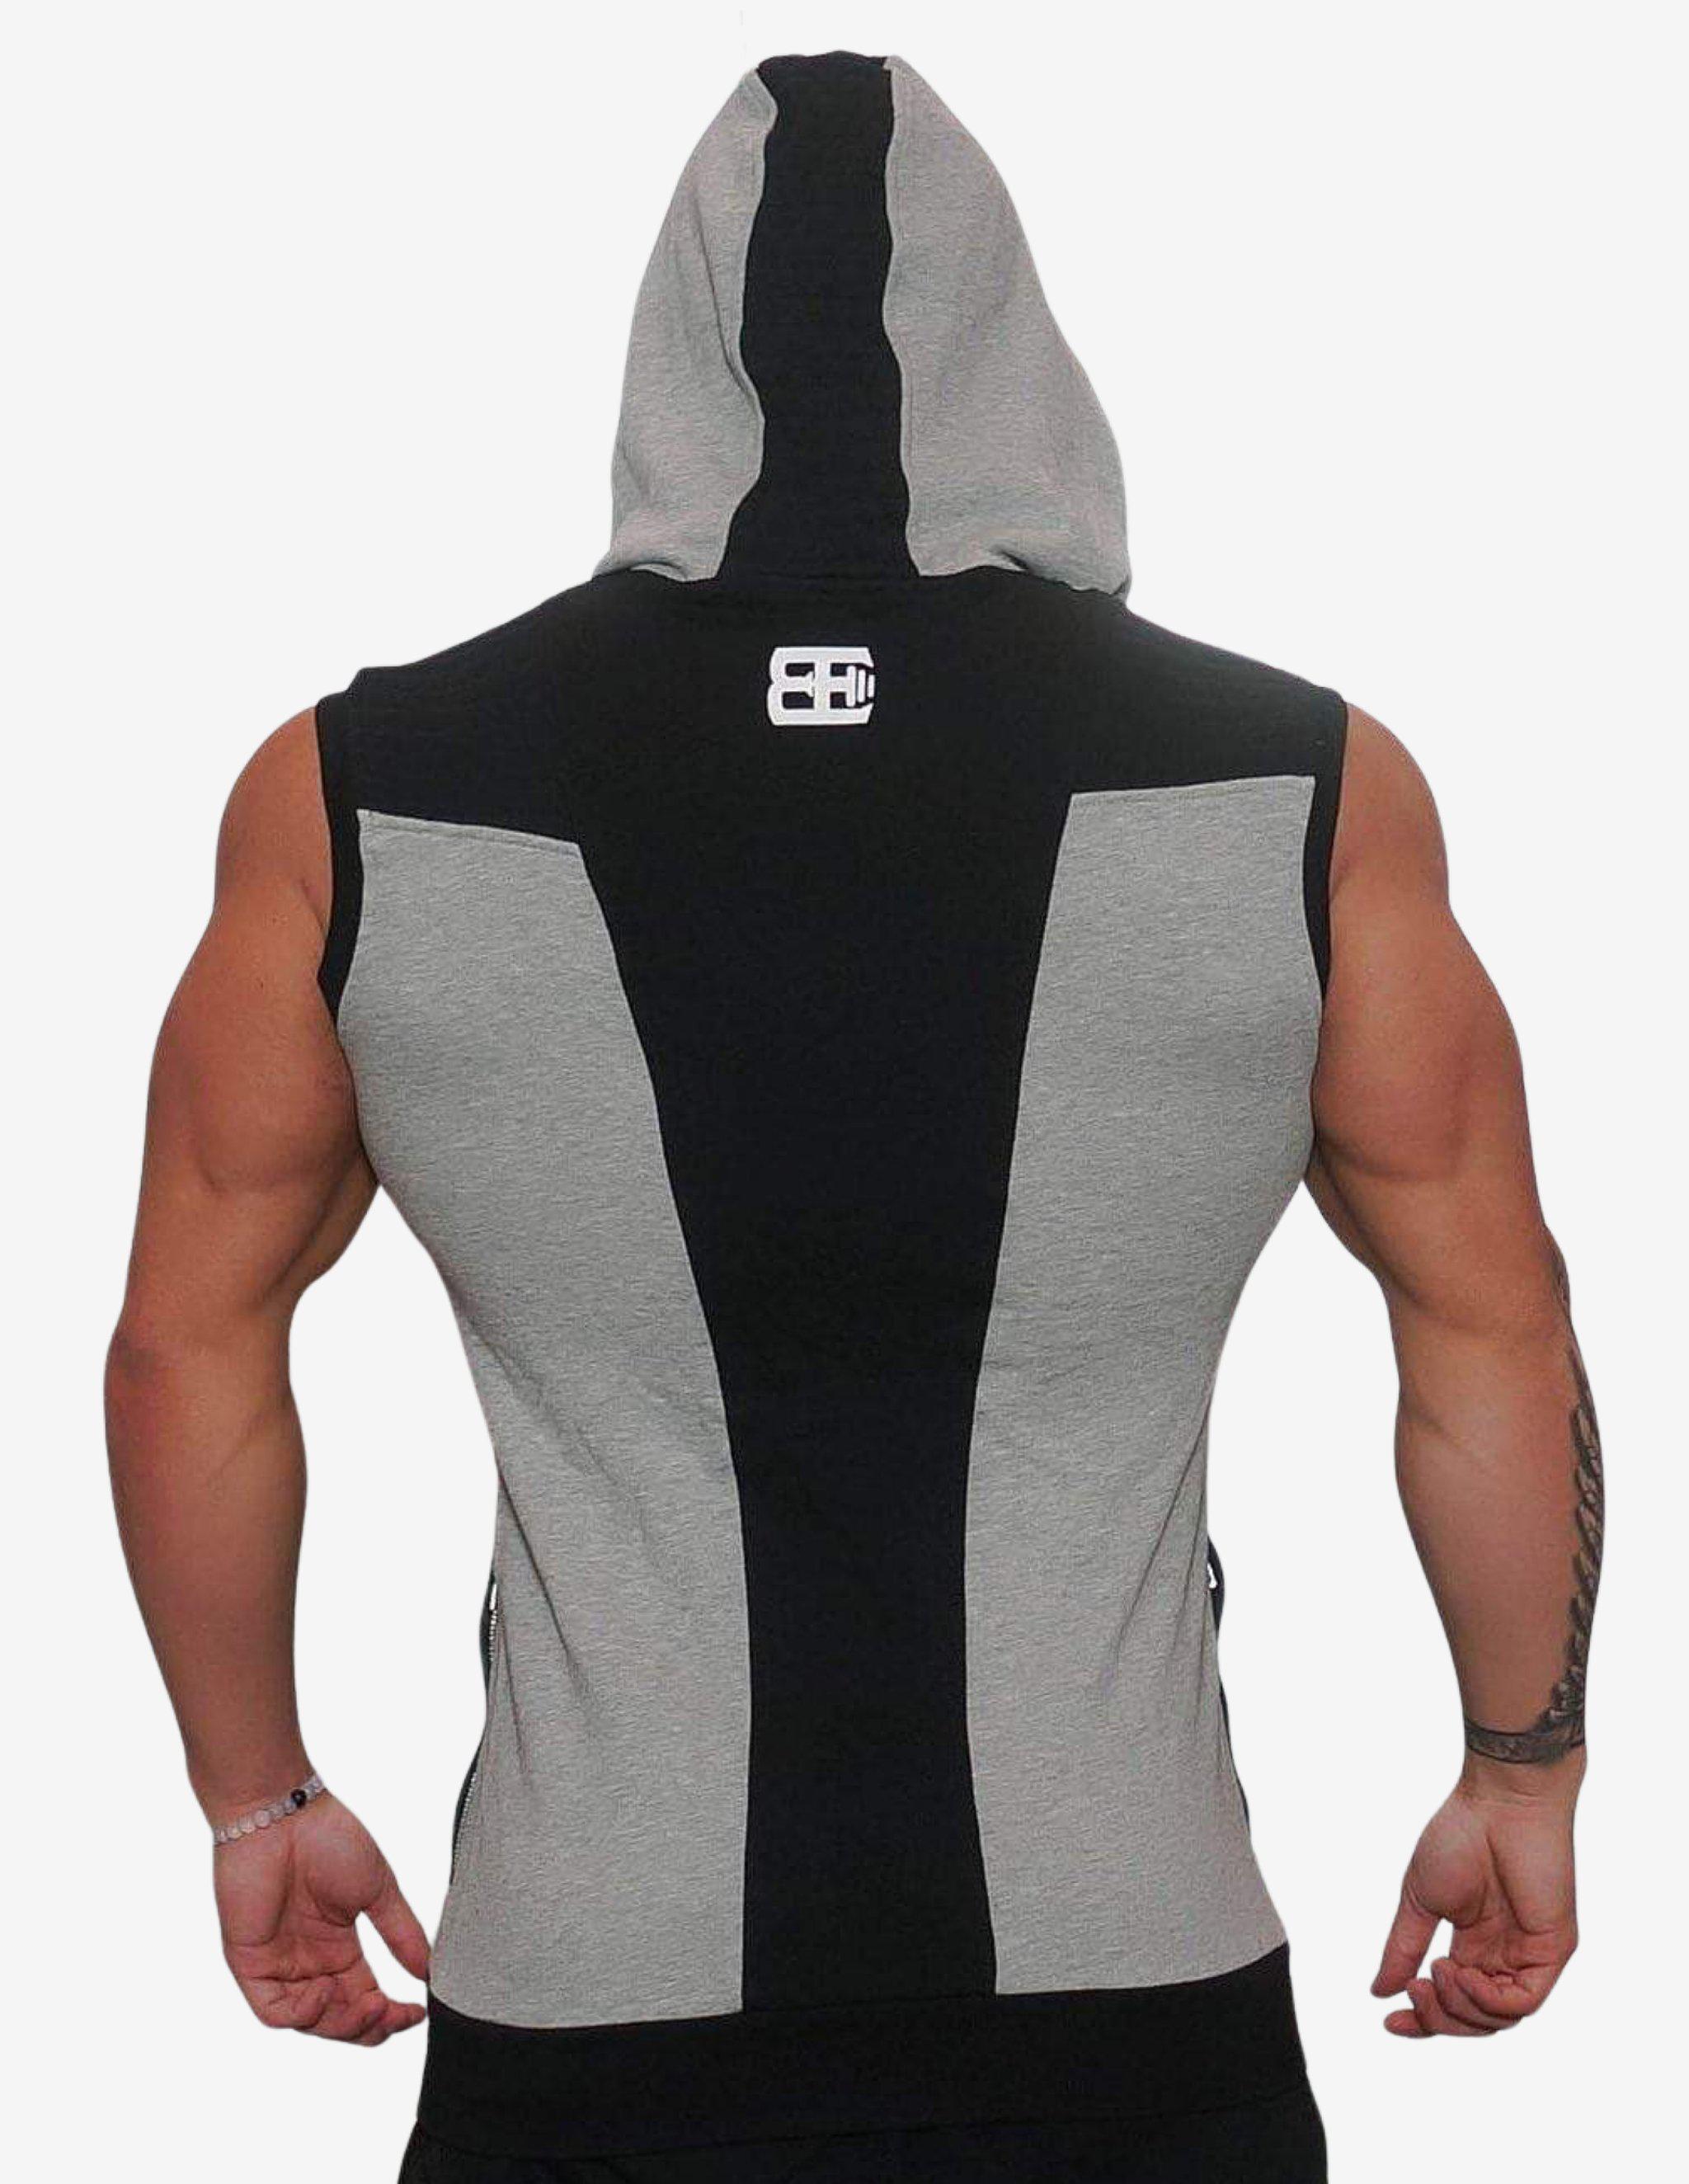 YUREI Sleeveless vest – LIGHT GREY & BLACK ACCENTS-Hoodie Man-Body Engineers-Guru Muscle